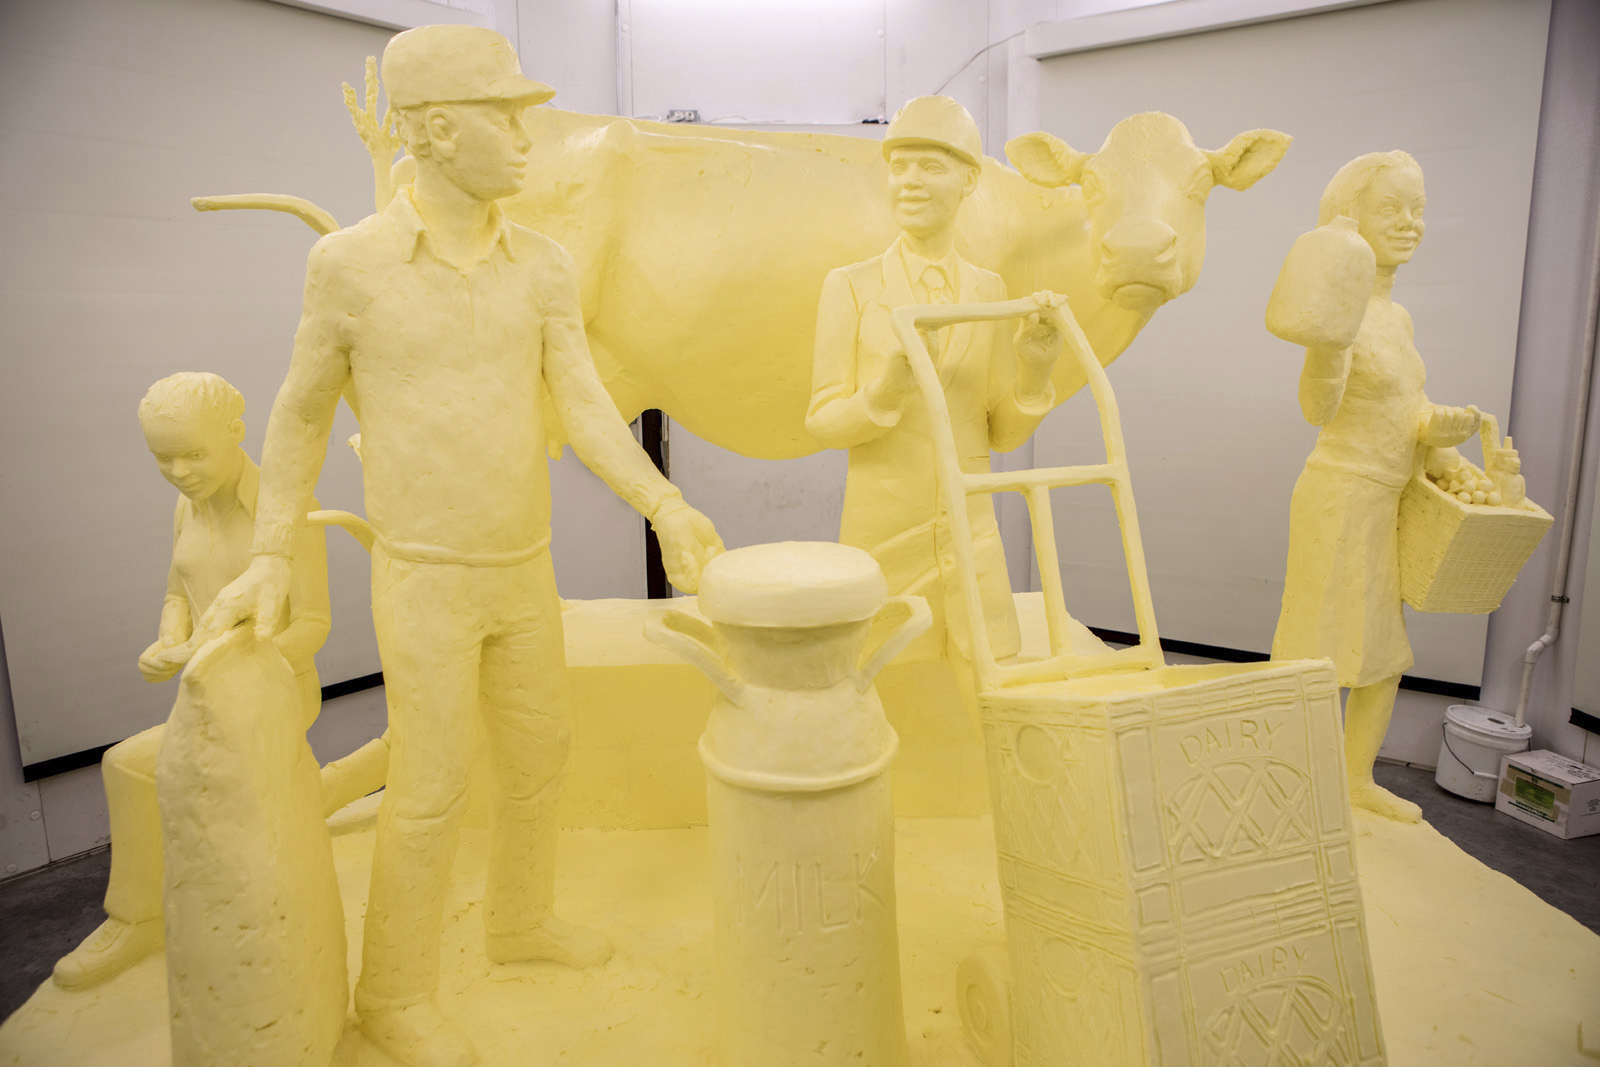 Pa. Farm Show butter sculptors were ready to go ahead, but then it